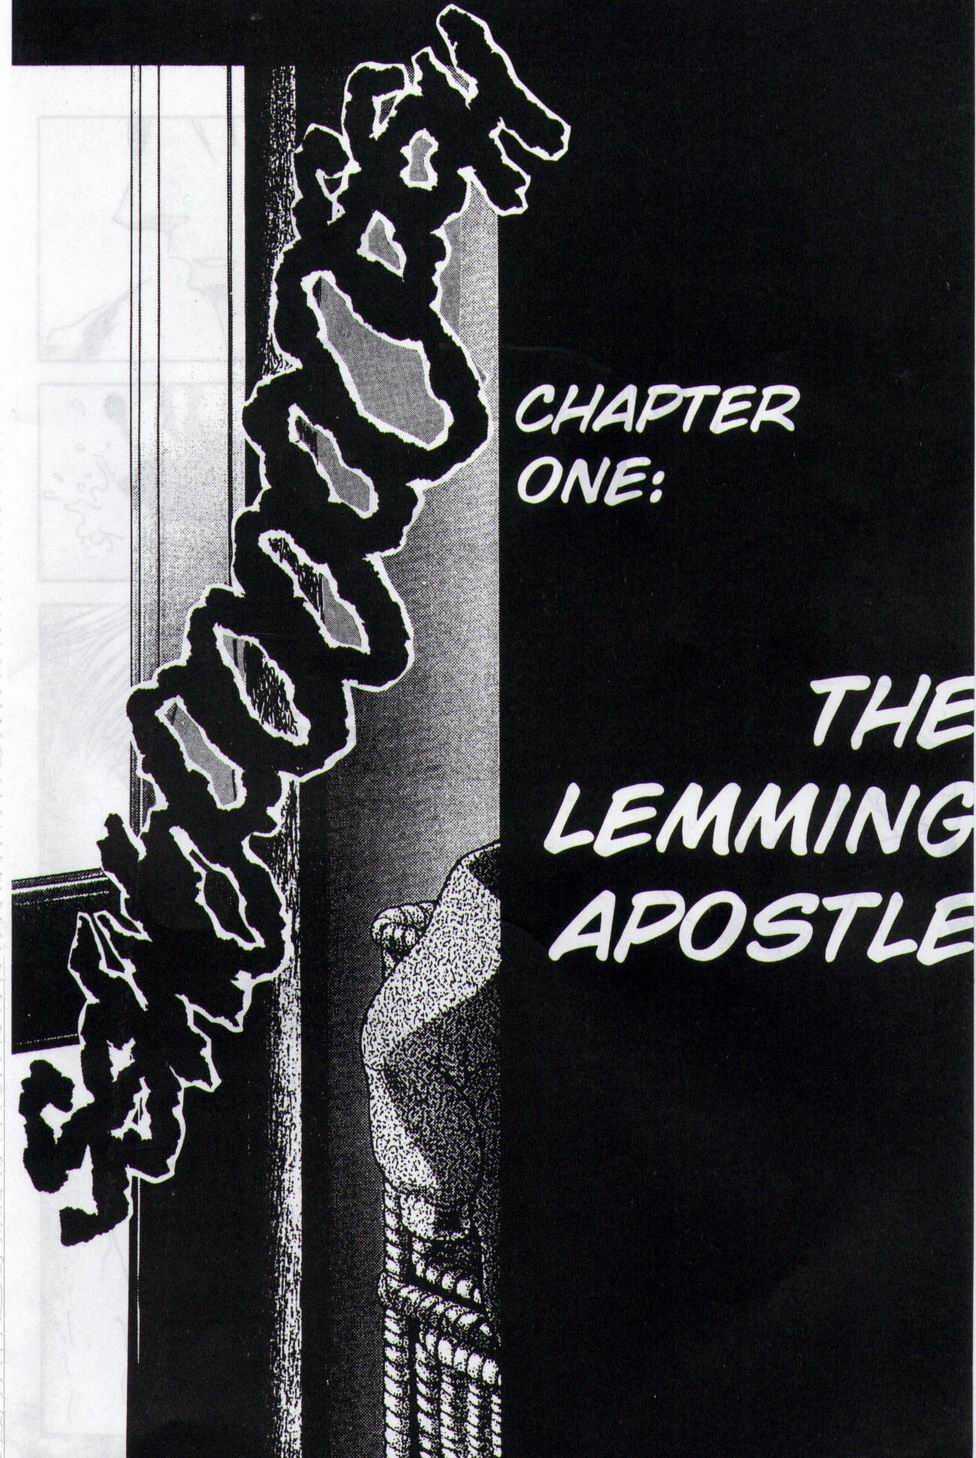 [Koh Kawarajima] Immoral Angel Volume 2: Lemming Apostle [English] 